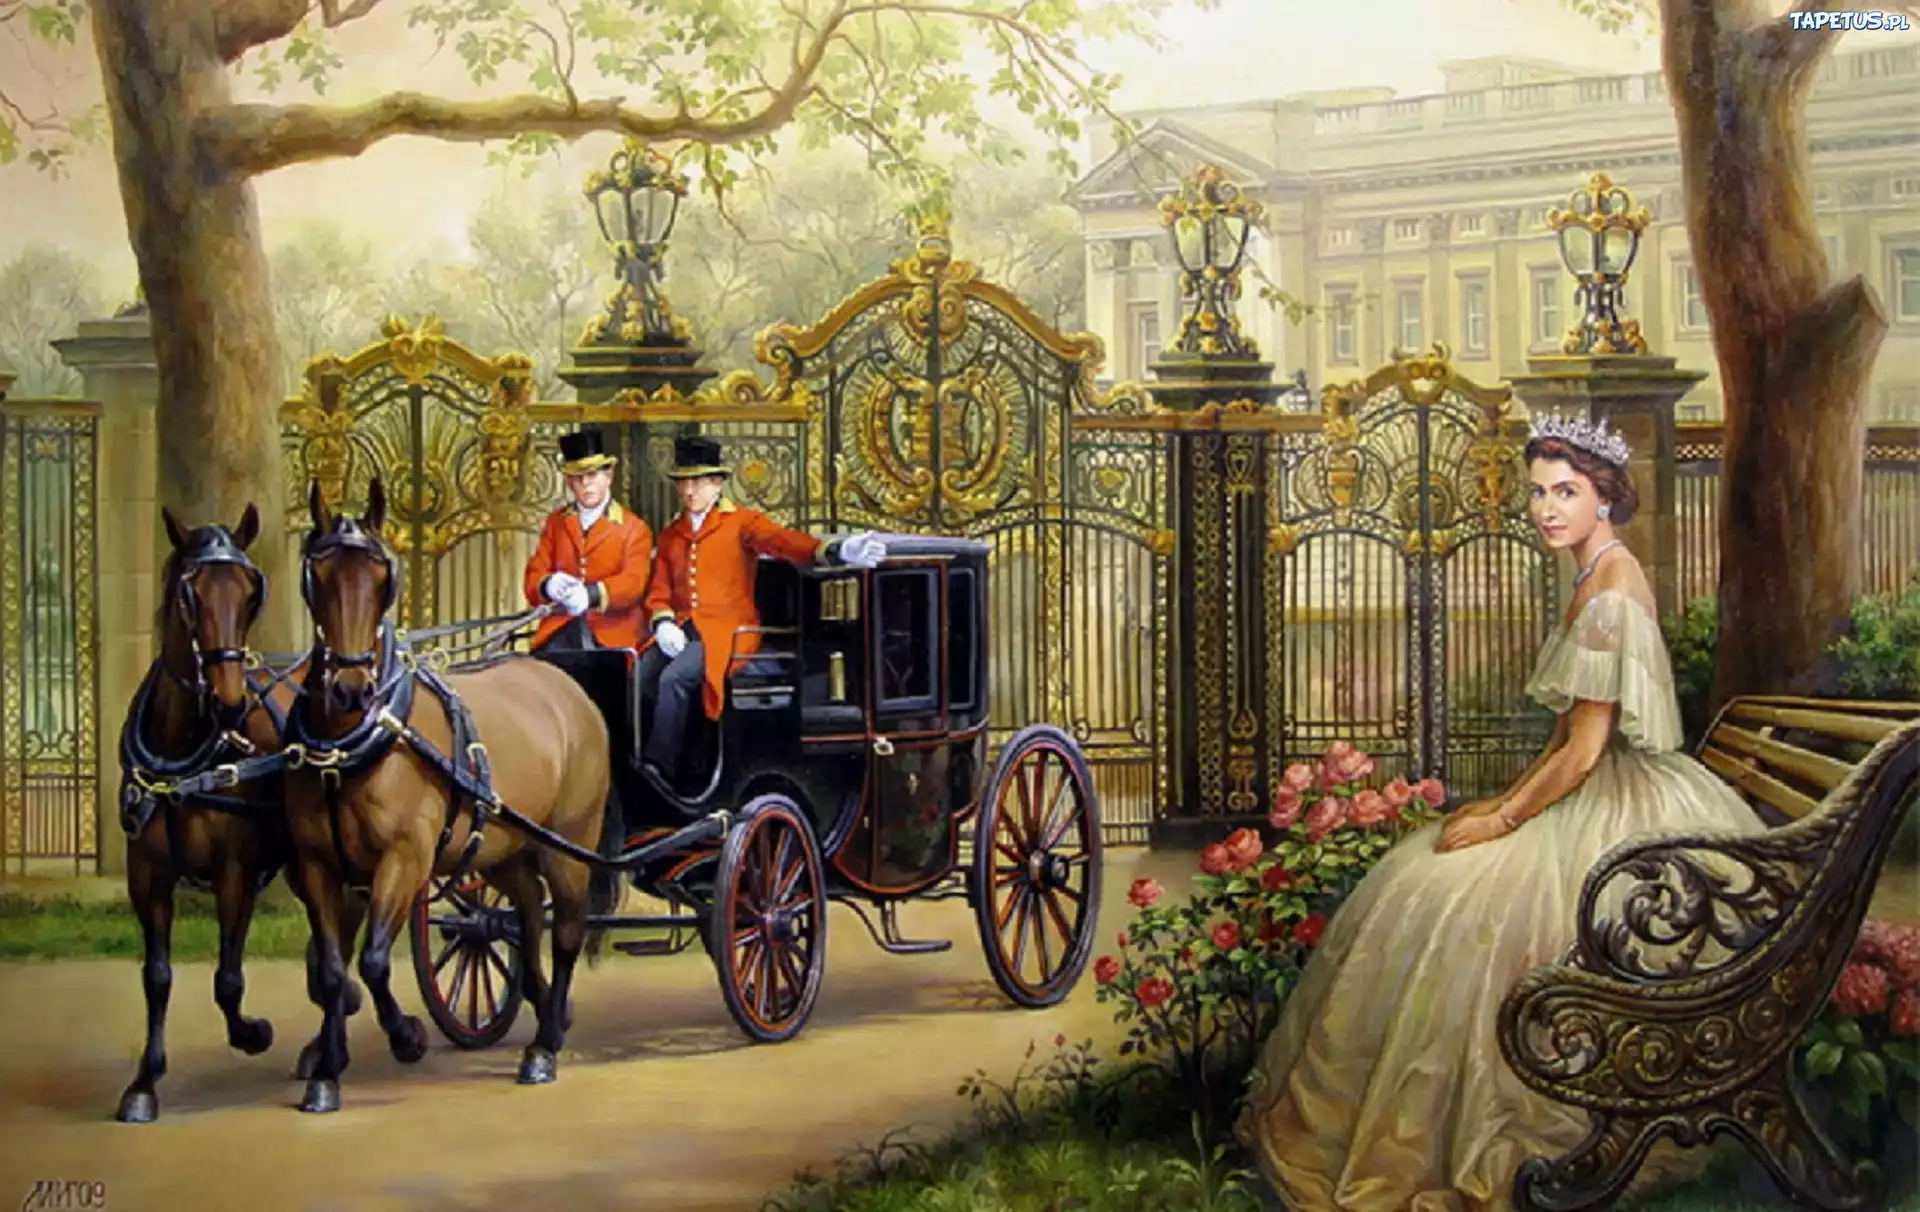 Богатая карета. Хейвуд Харри живопись повозки карета. Карета Королевская 19 века. Карета 18 век.